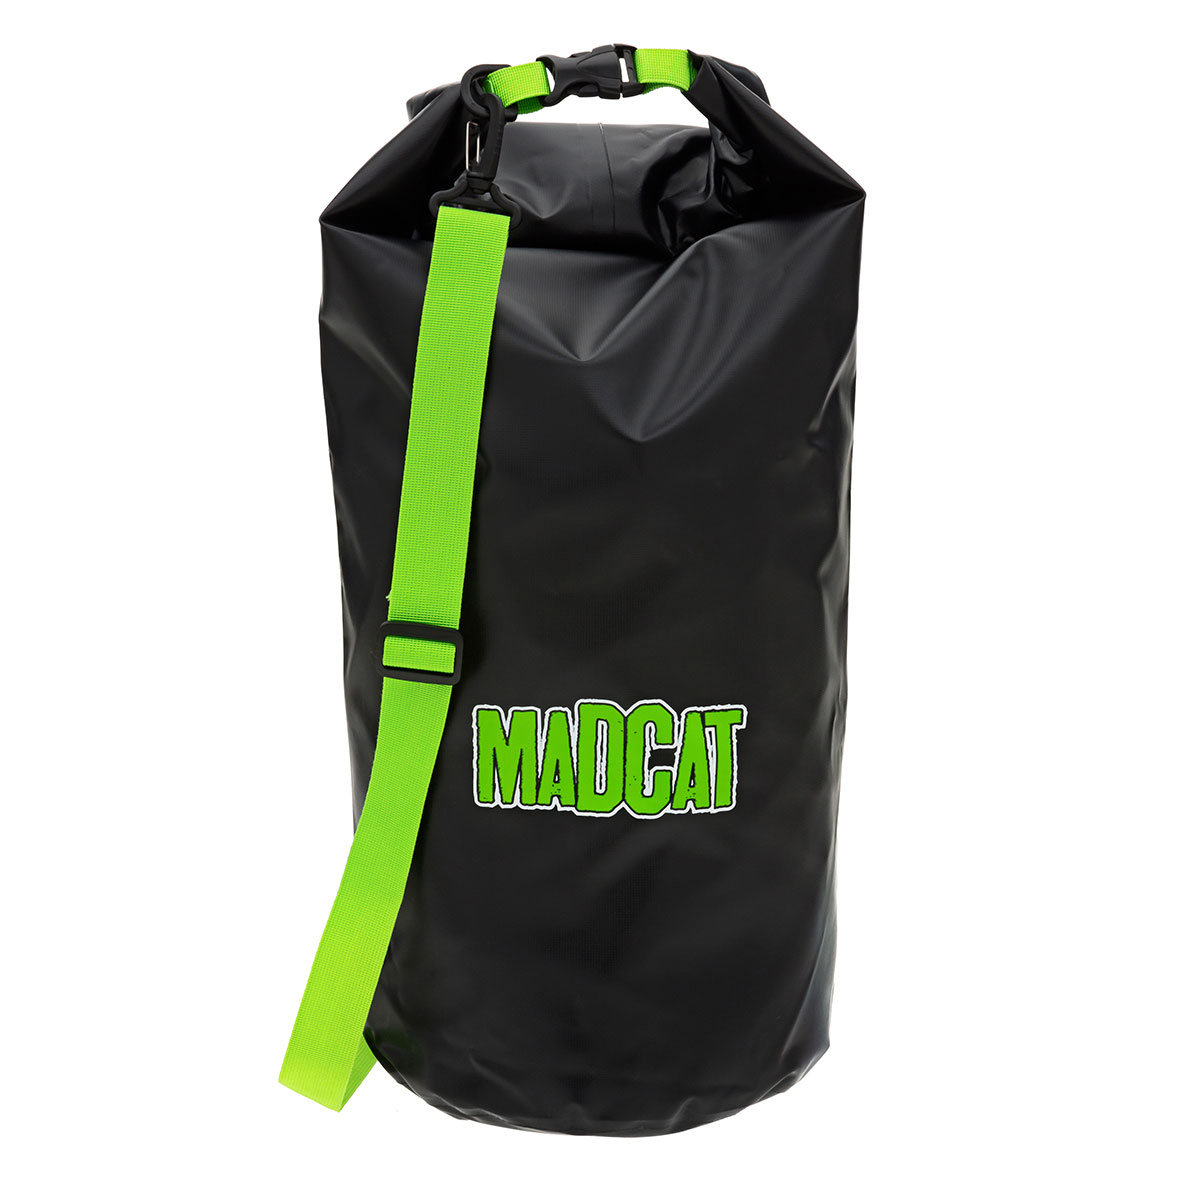 MADCAT Waterproof Bag 55 L